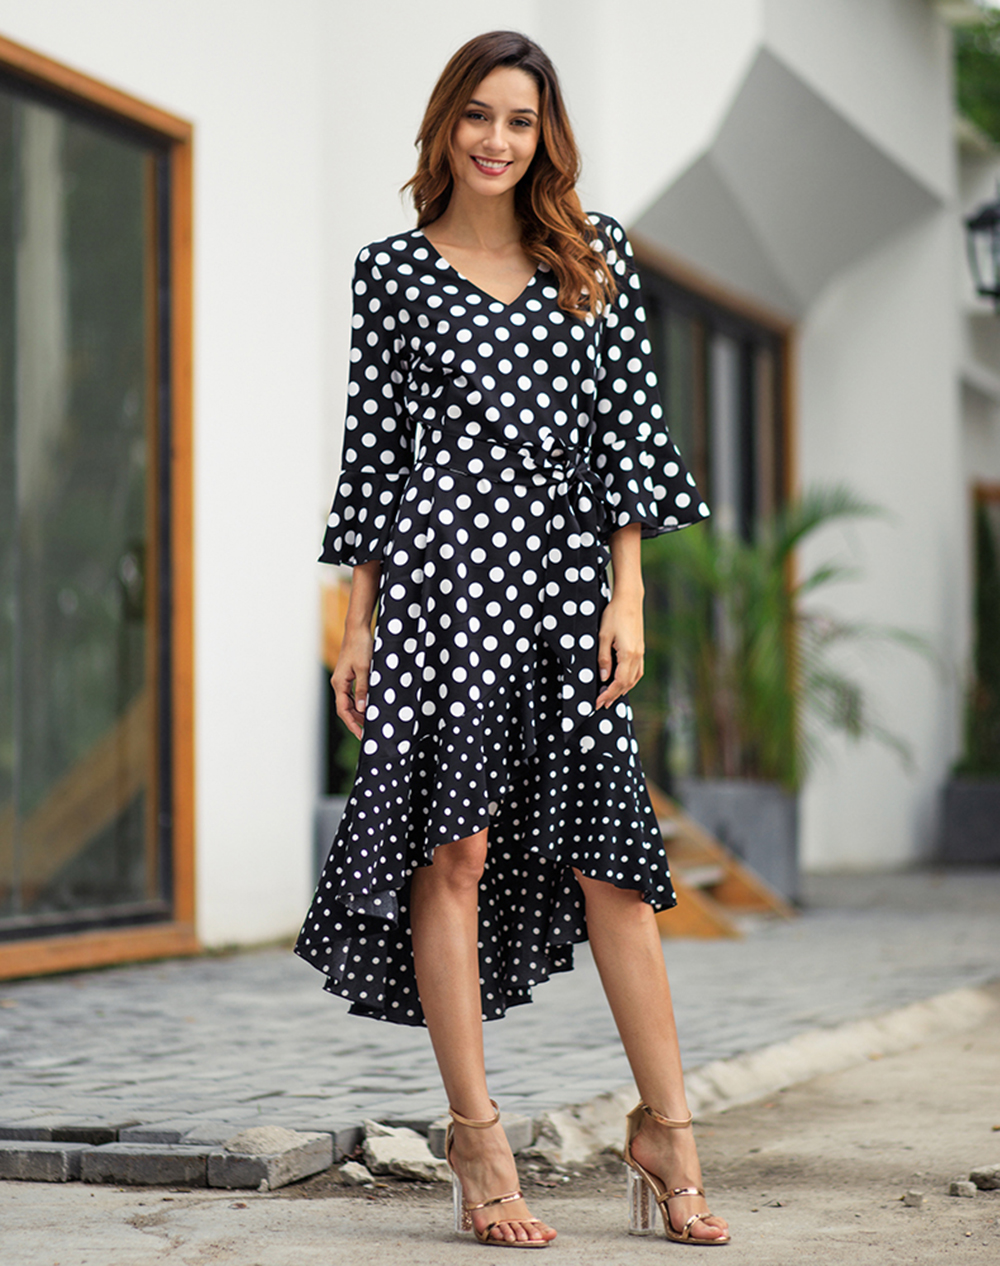 2019 Spring New Wave Long Sleeve Dot Large Size Dress